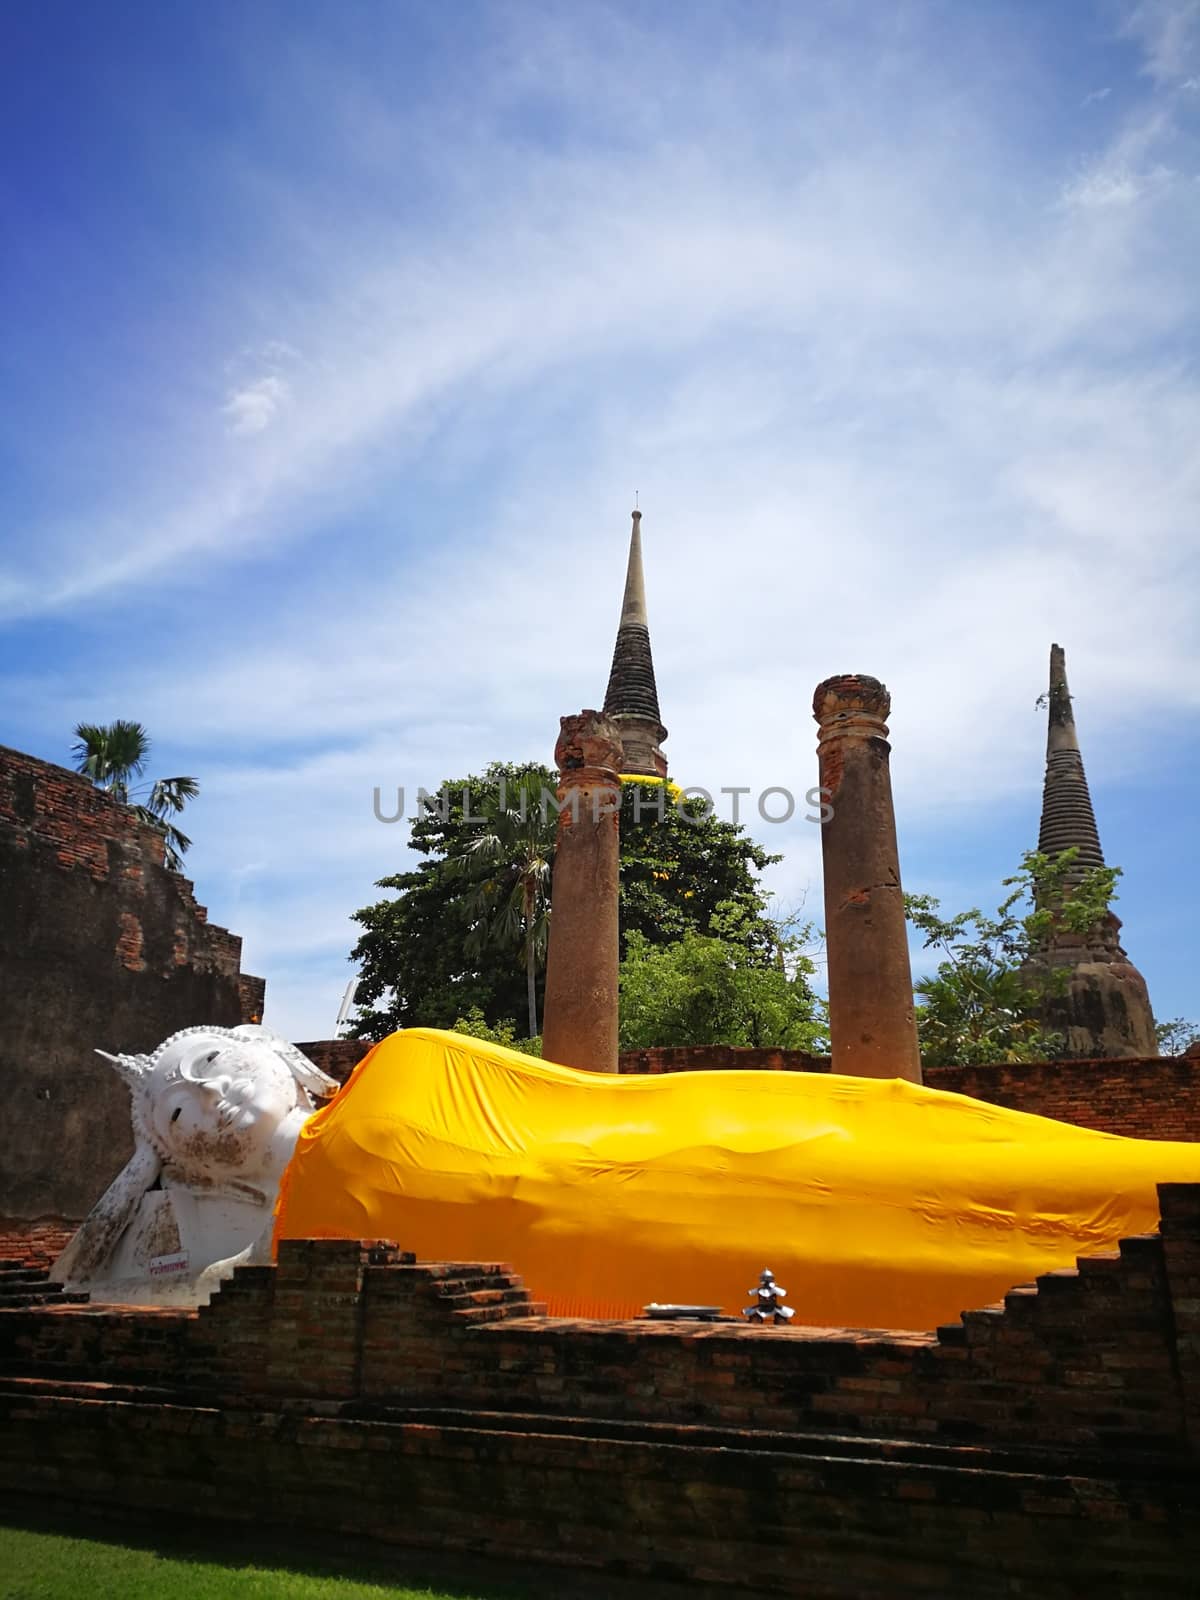 A beautiful Thailand temples, pagodas and Buddha statute by shatchaya